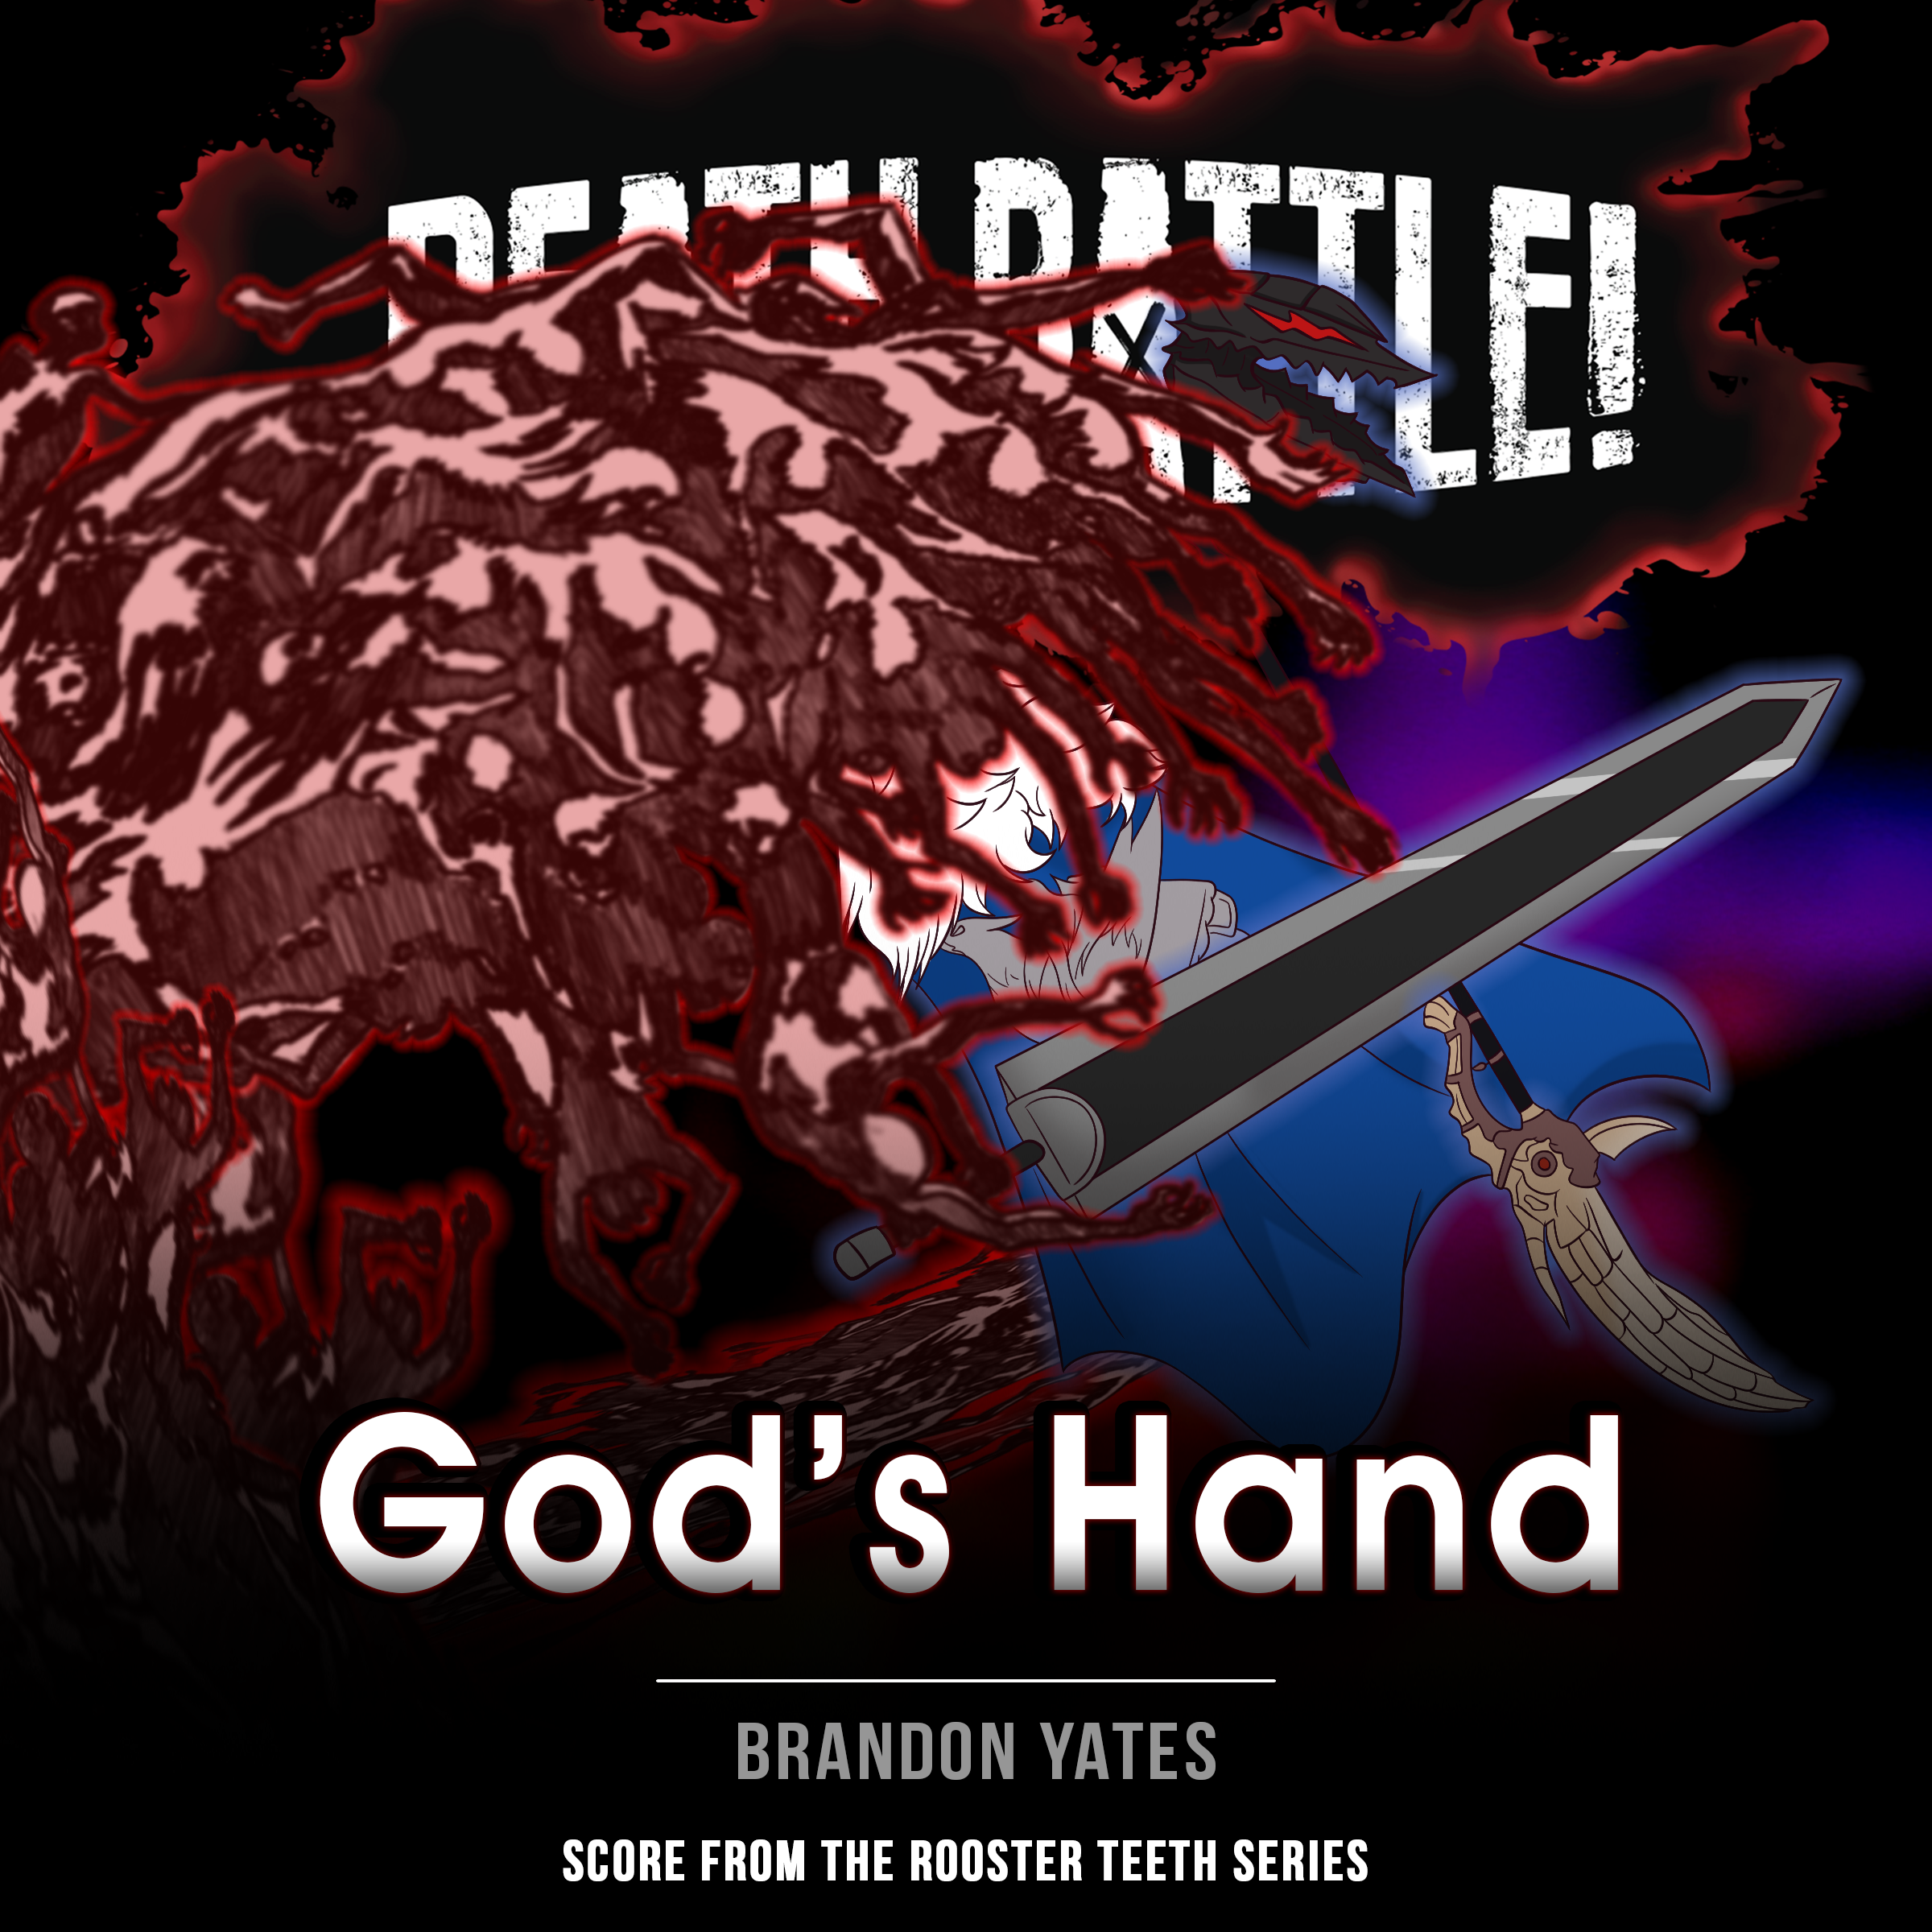 Brand of Sacrifice – God Hand Lyrics